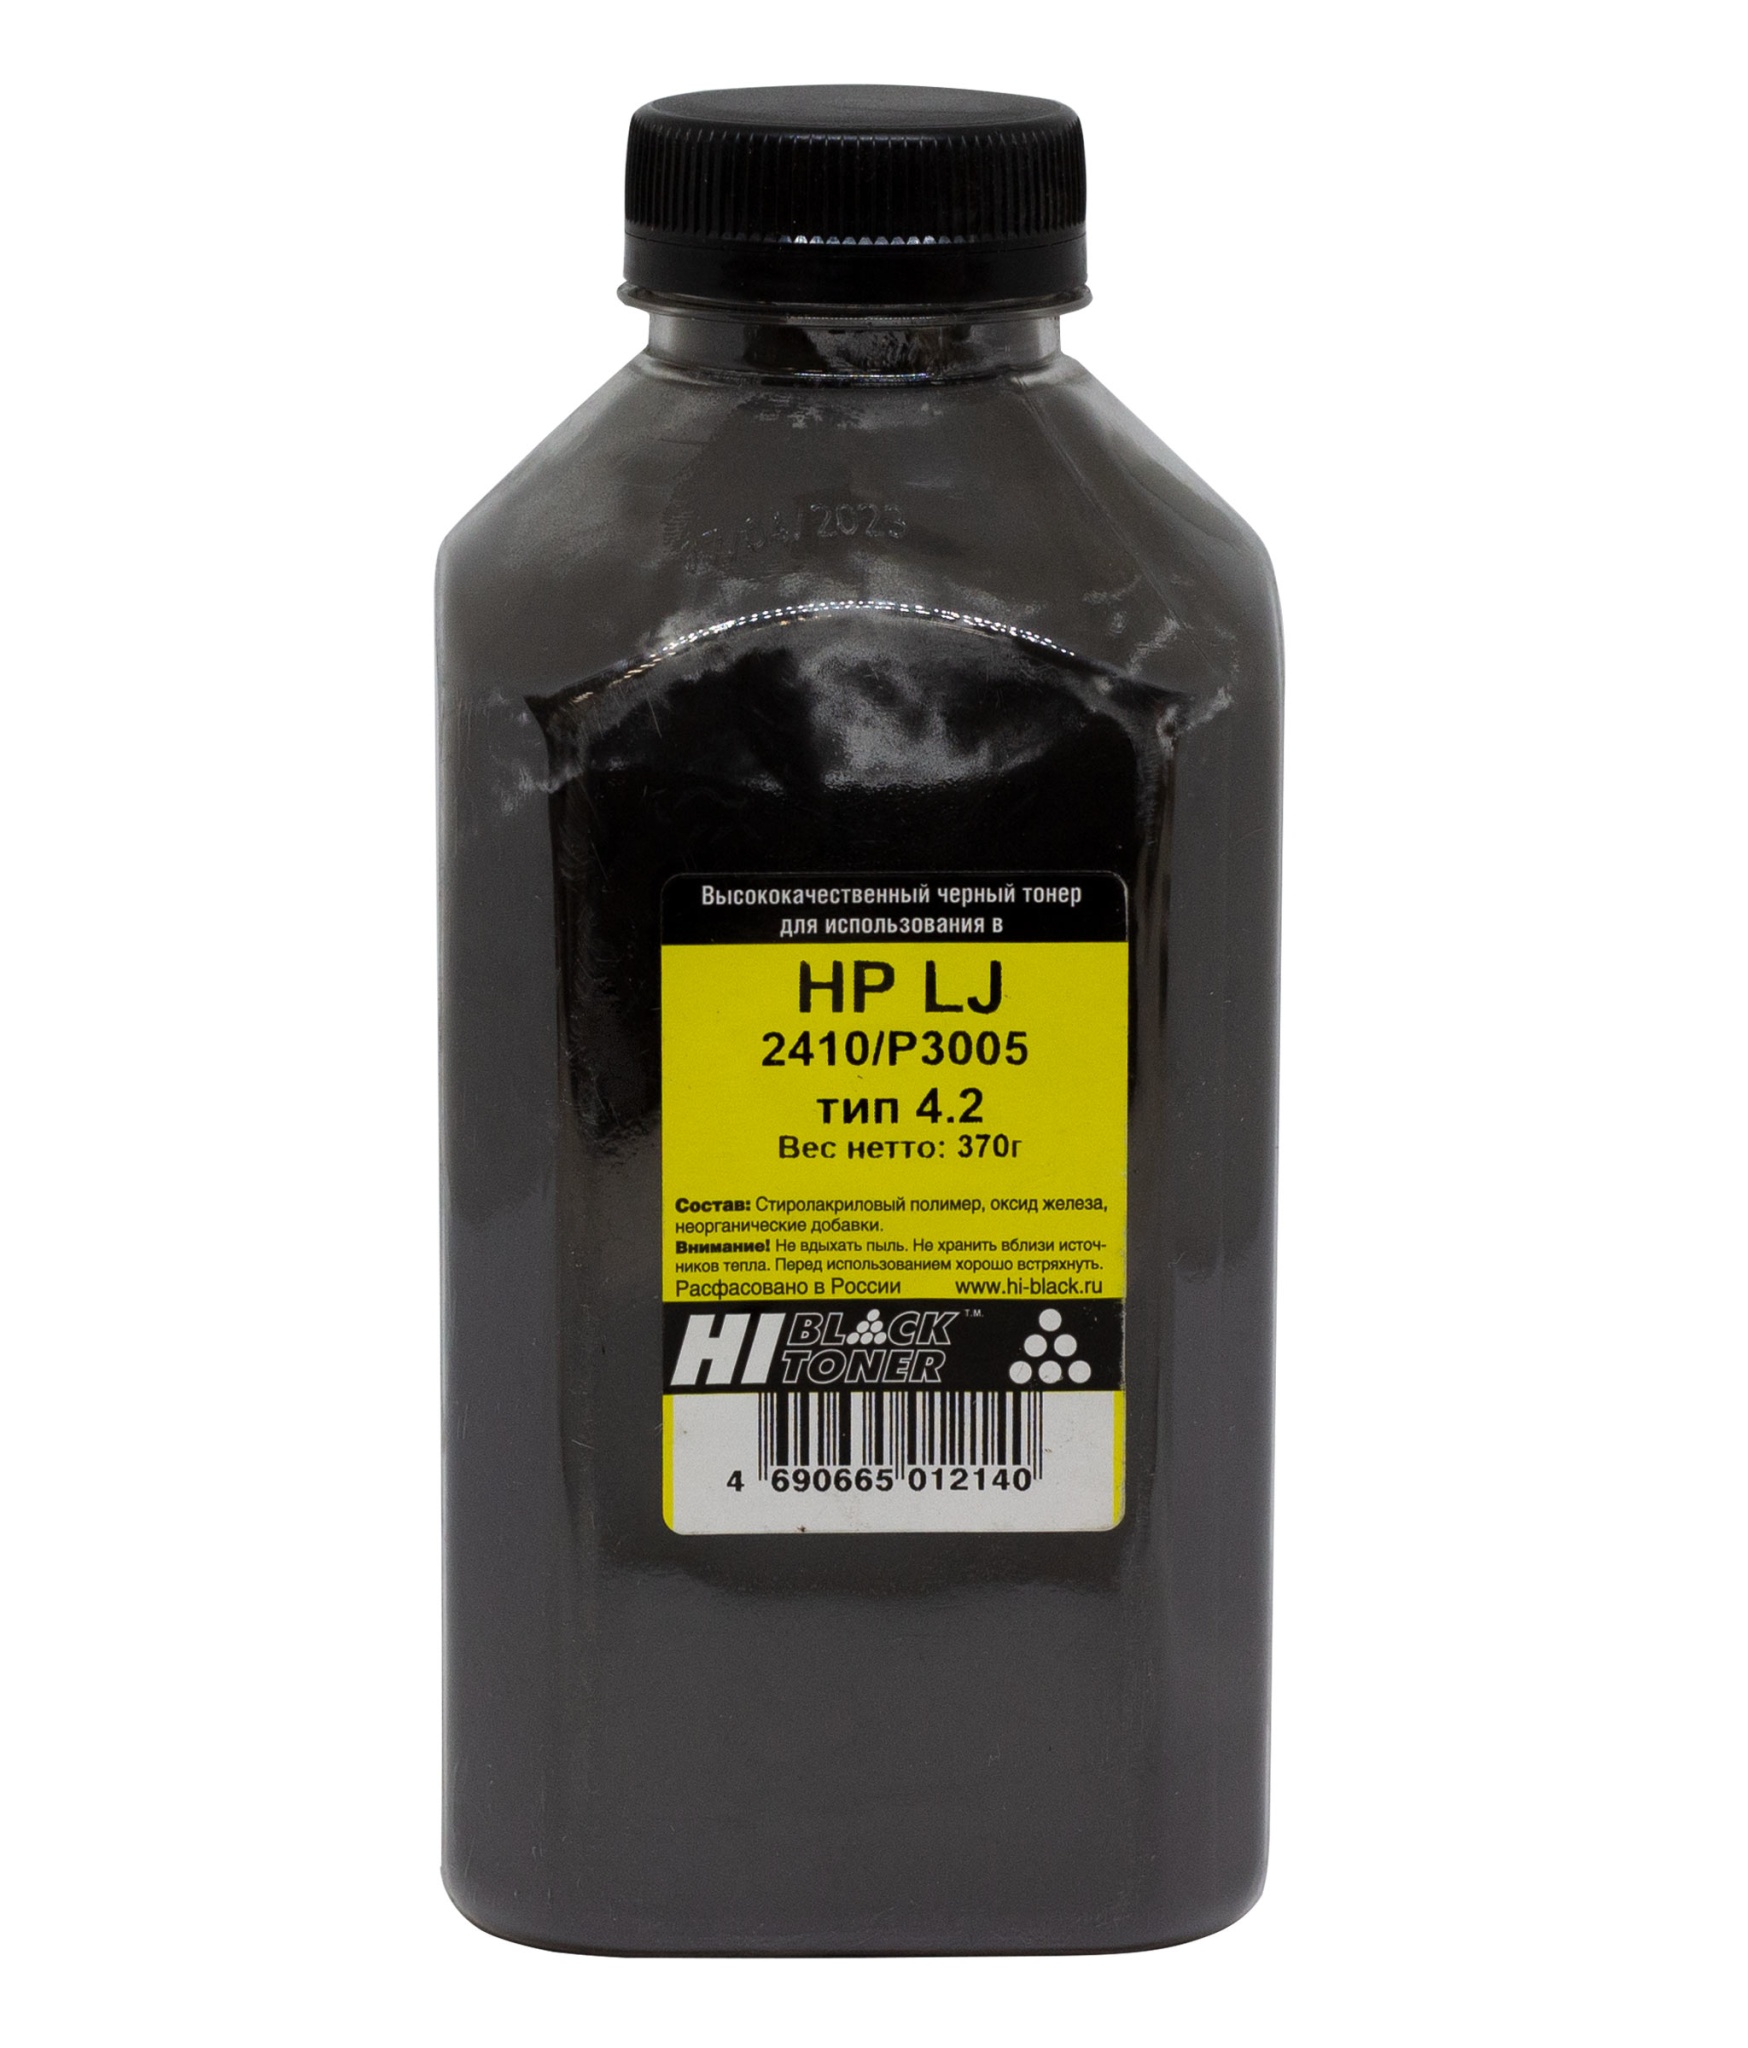 Тонер Hi-Black (Q6511A) для HP LJ 2410/ P3005, Тип 4.2, чёрный (370 гр.)